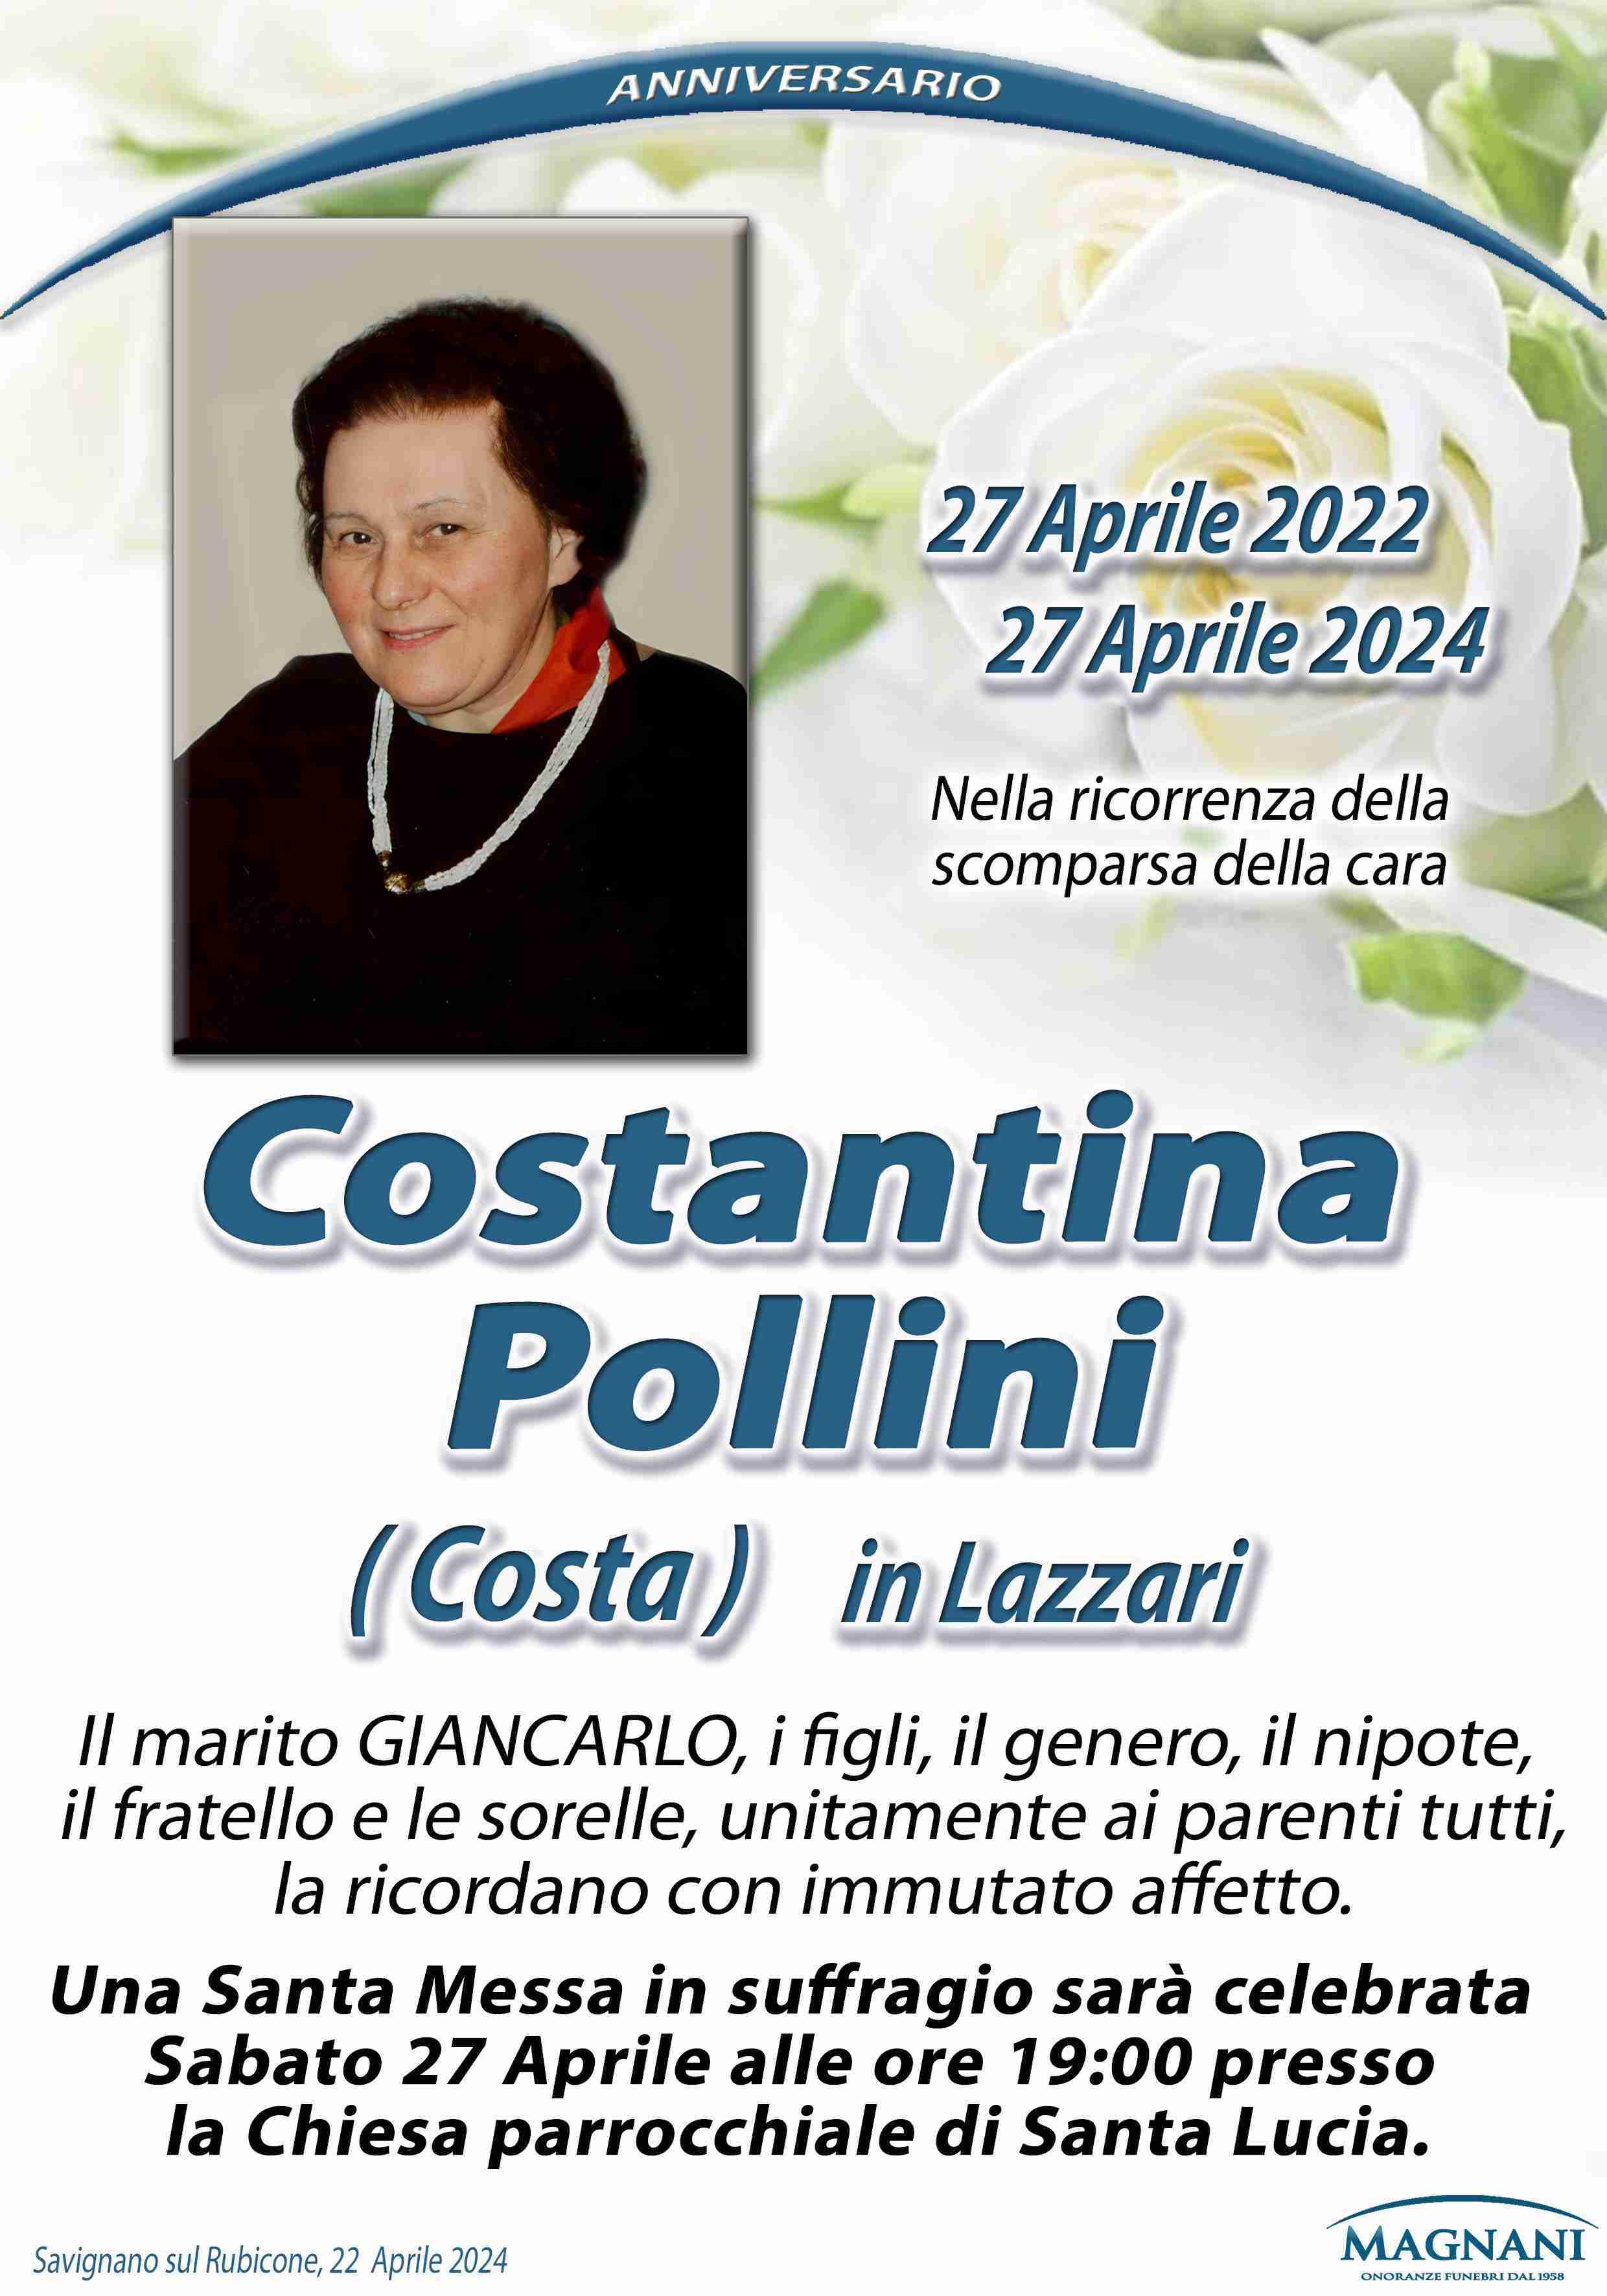 Costantina Pollini